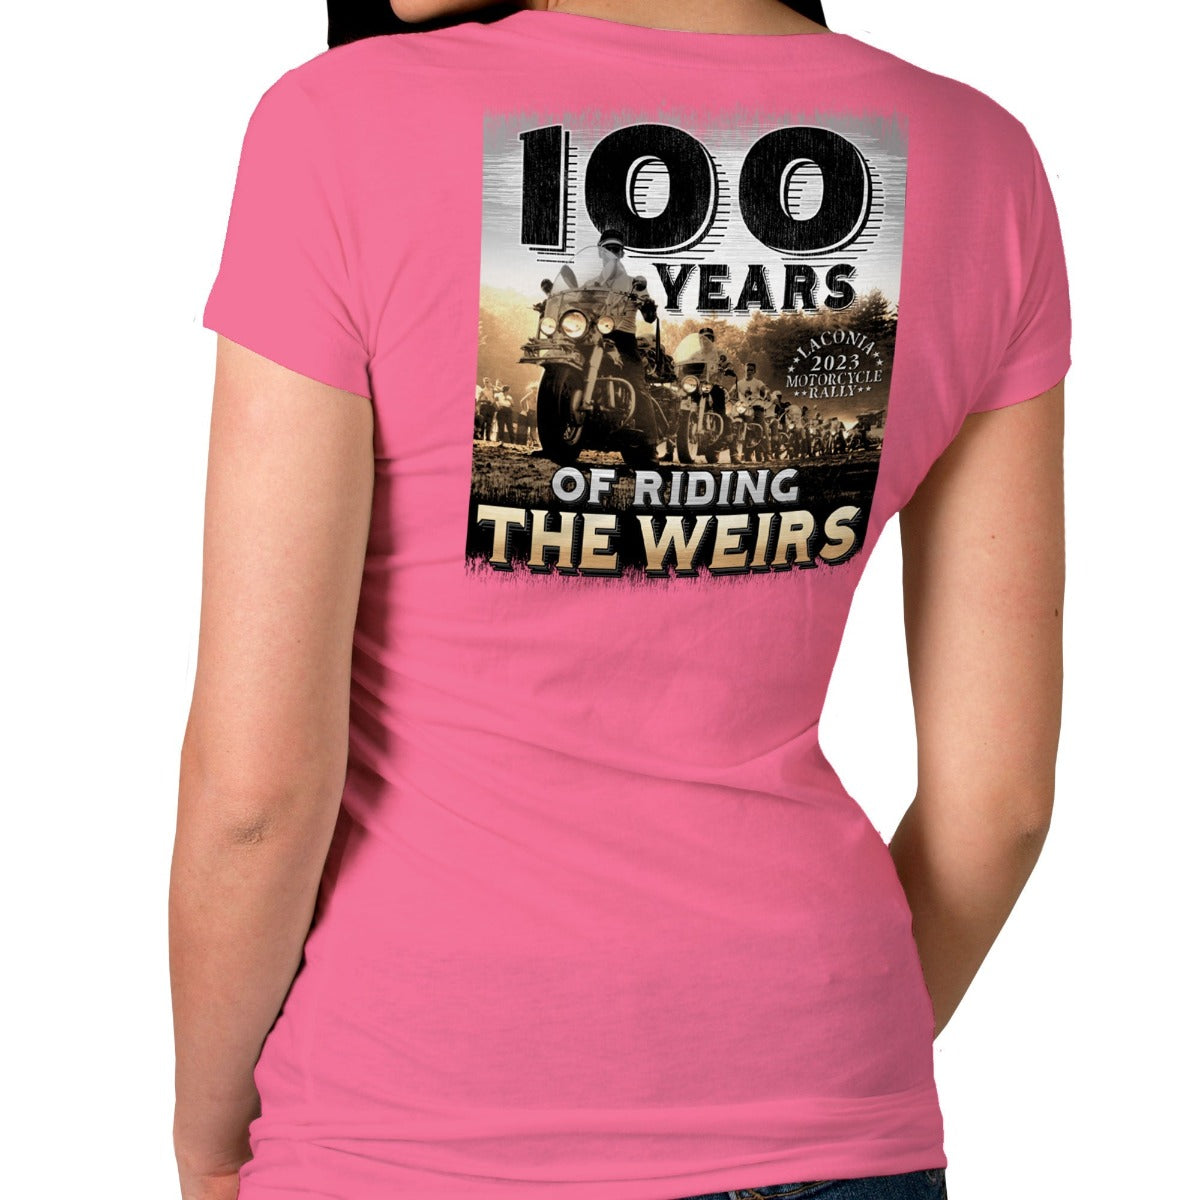 Hot Leathers Ladies Laconia Bike Week 2023 100 Year Shirt